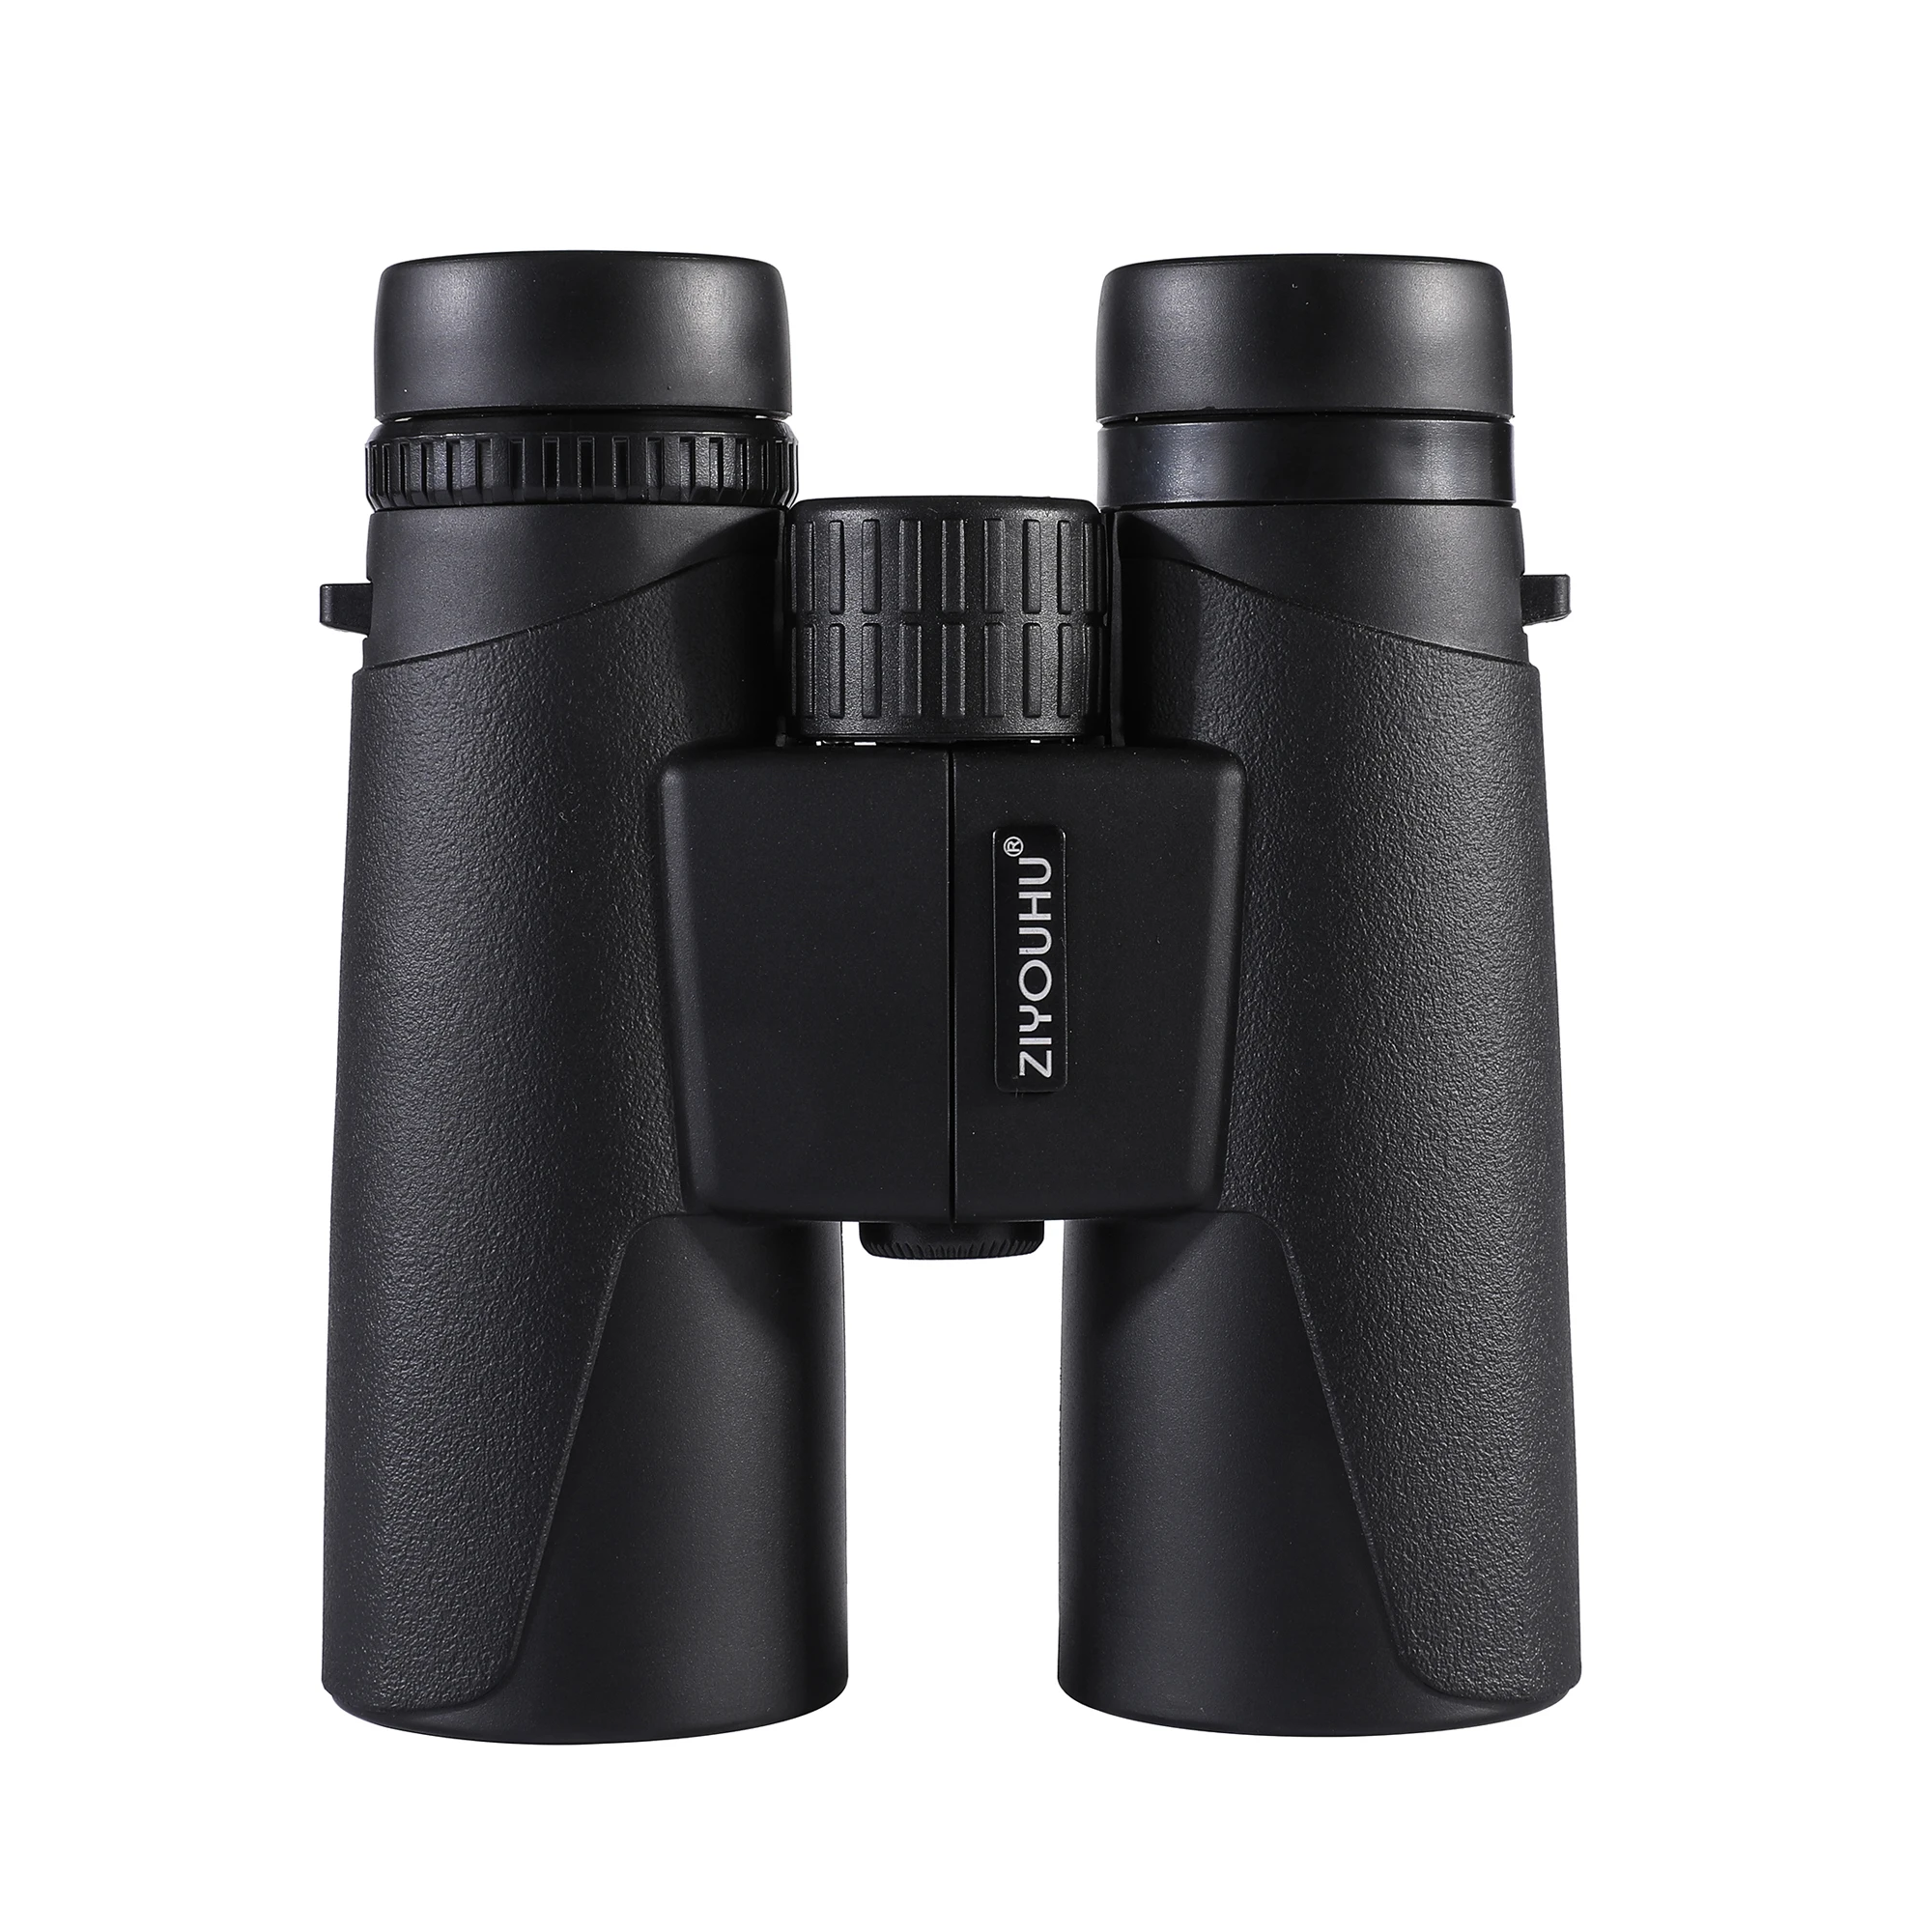 Handheld Telescope Binoculars 10x42 Binoculars Waterproof Outdoor Adventure BaK4 Prisms Optics Binocular for Hunting Camping